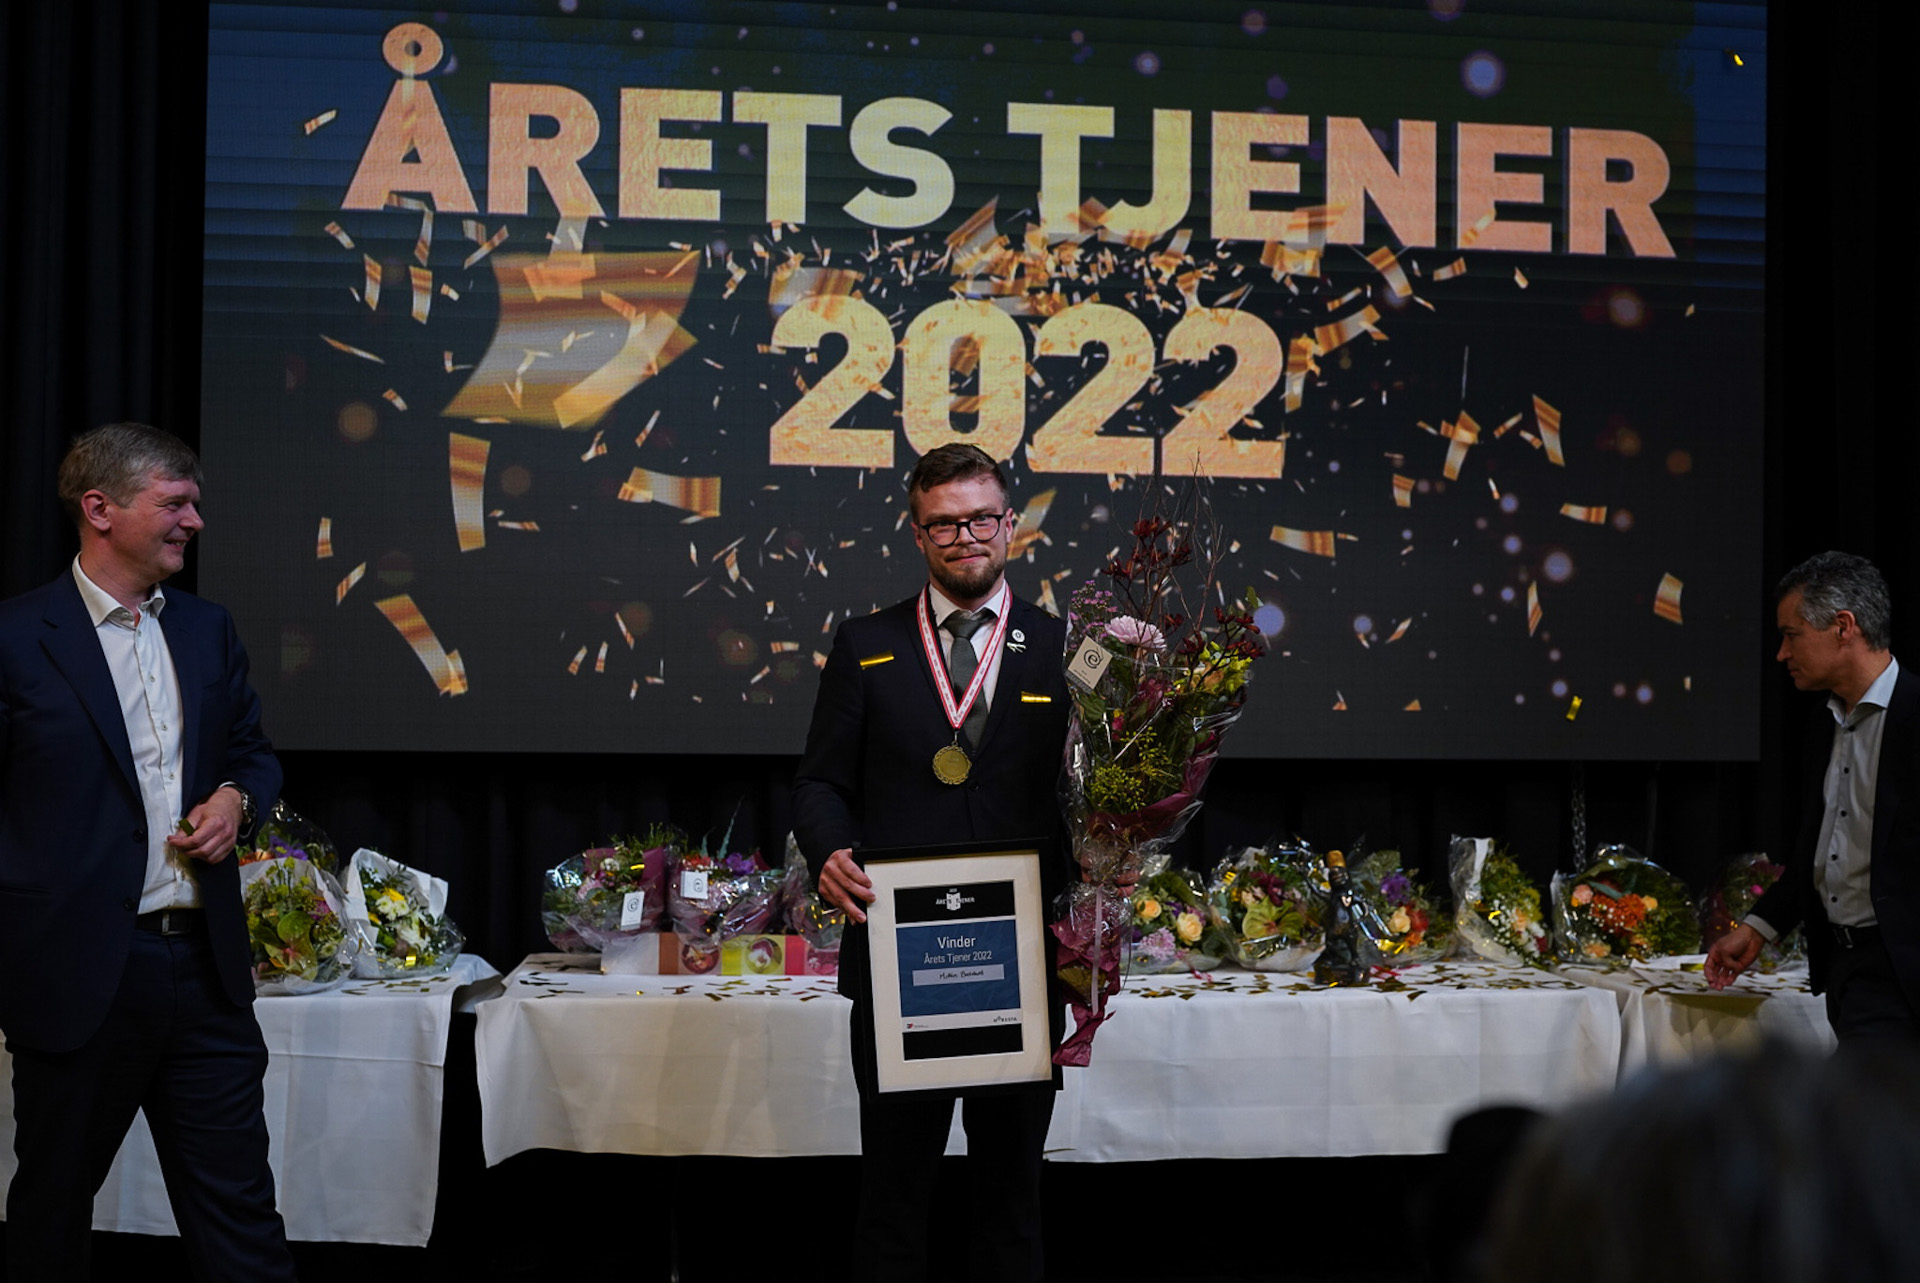 Årets Tjener 2022 blev Mathias Breinholt fra Restaurant Moment